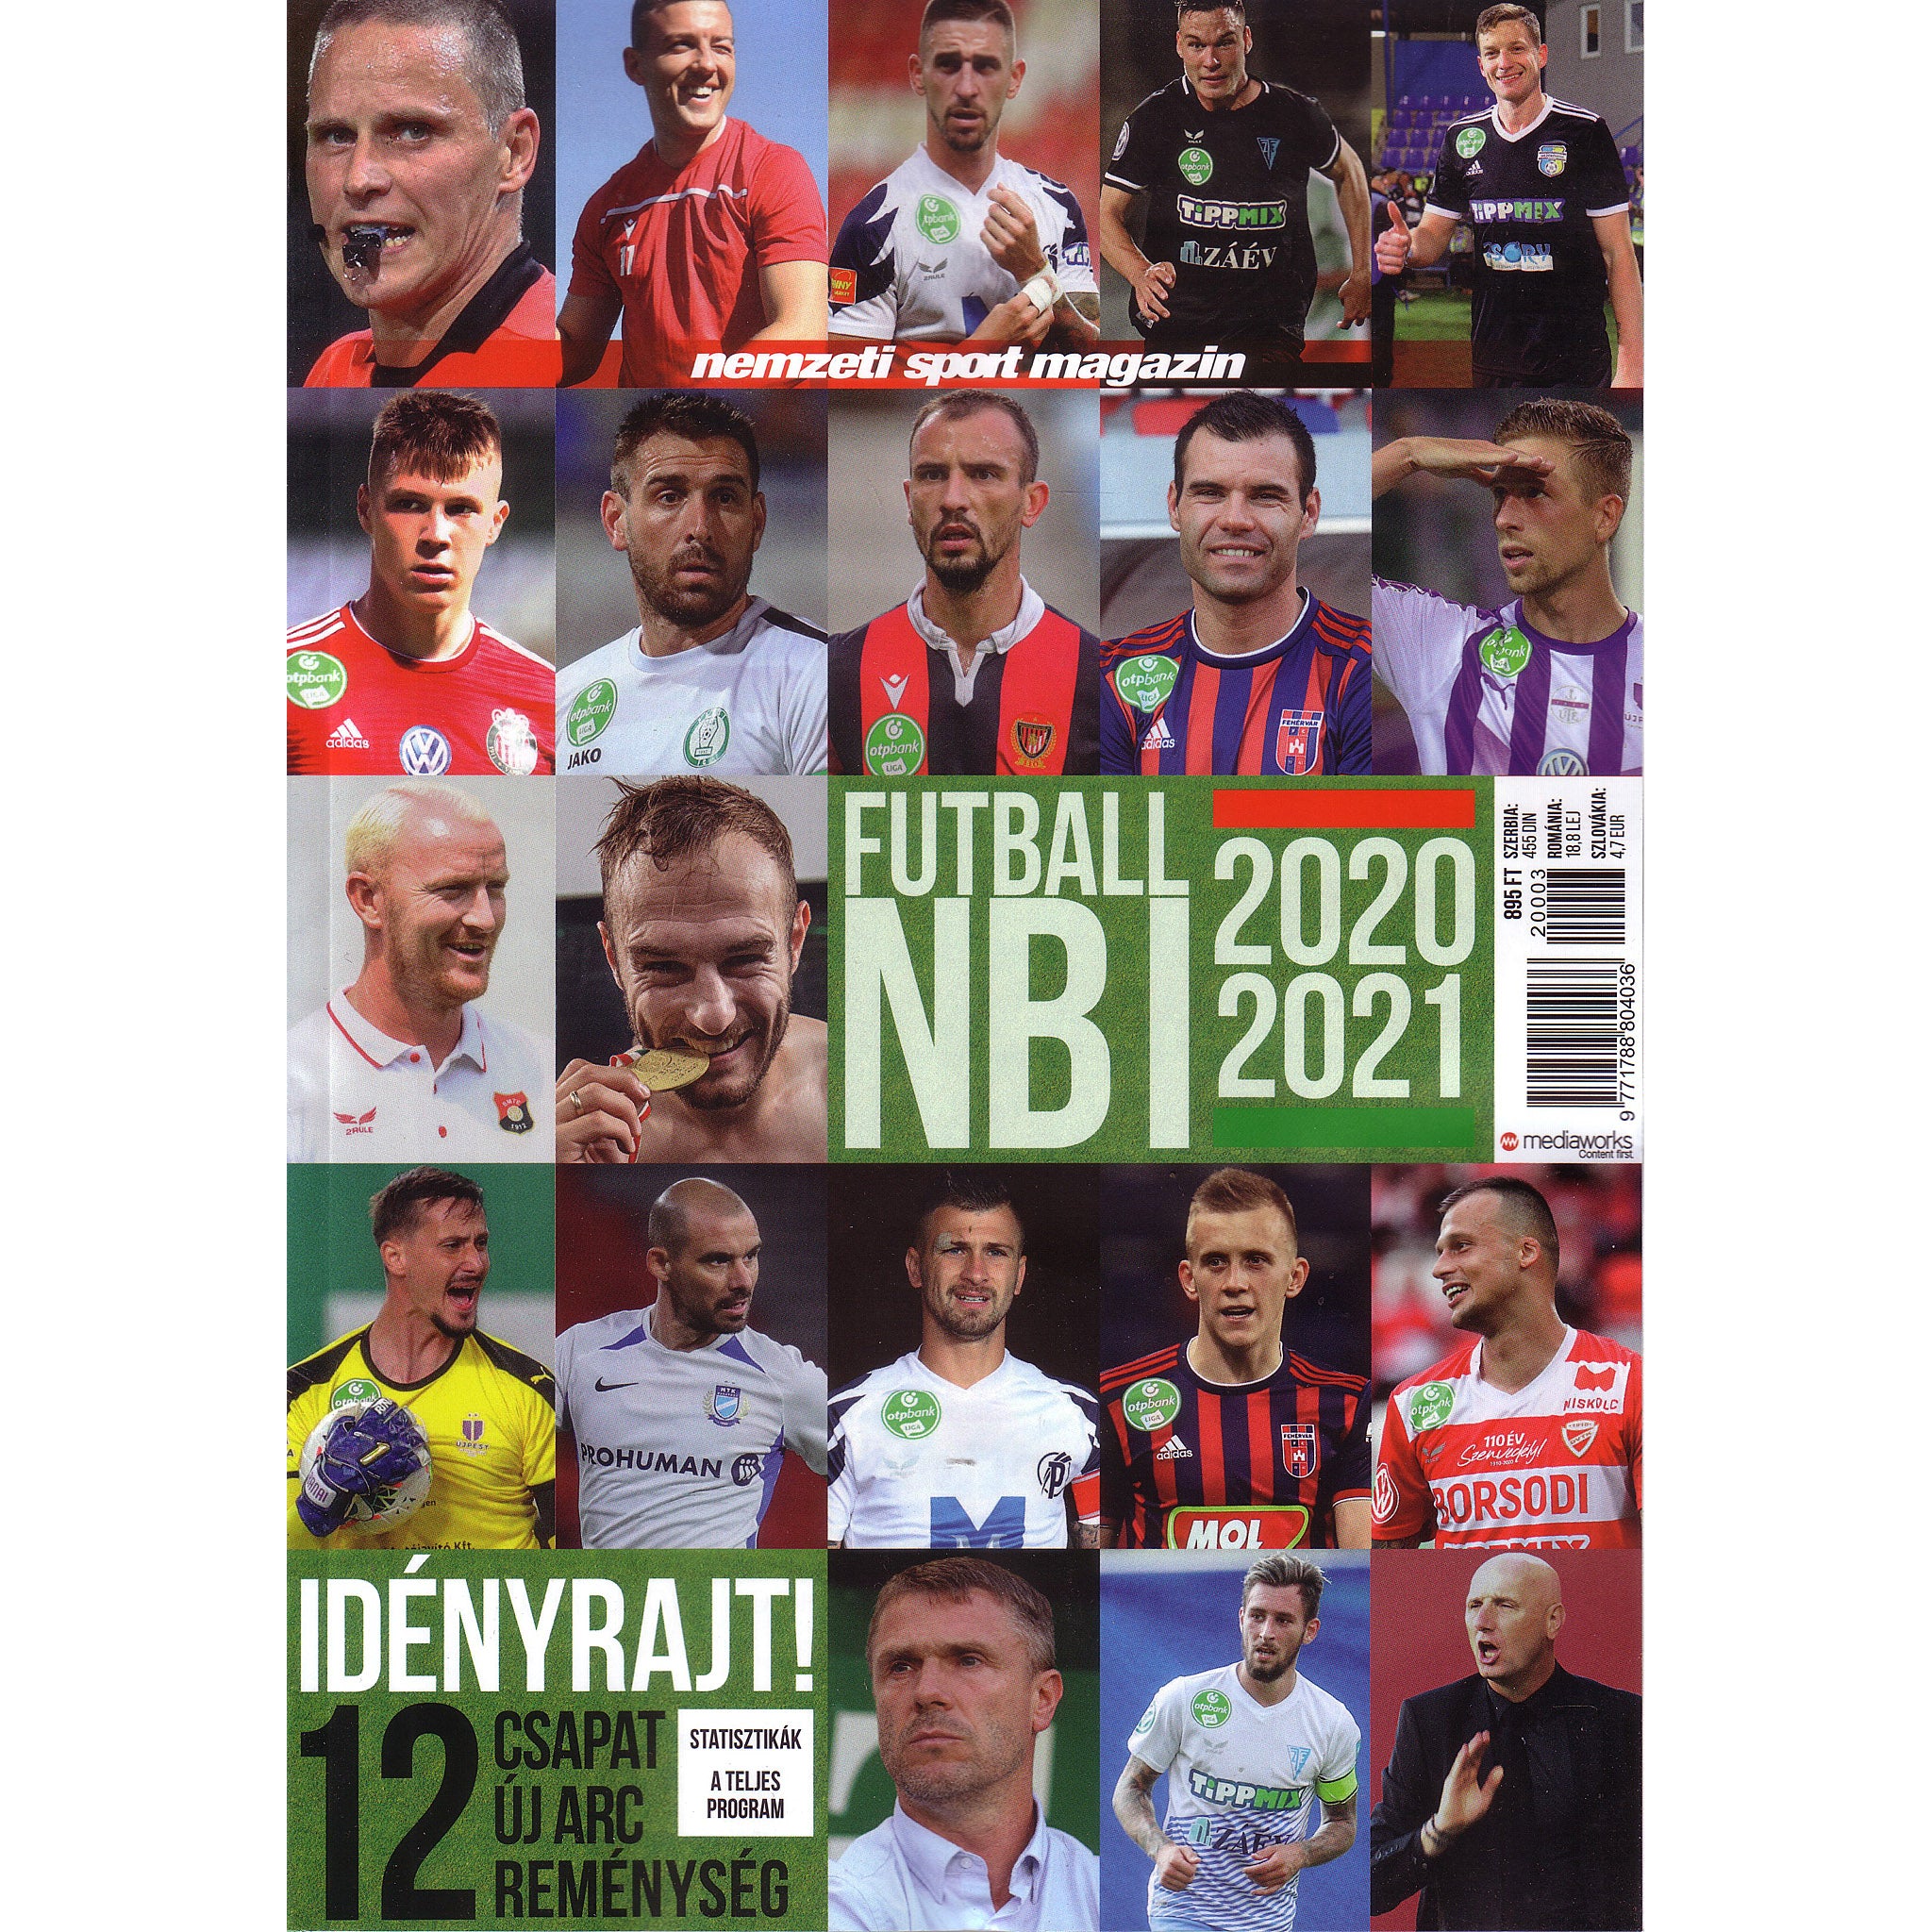 Nemzeti Sport Futball NB1 2020-2021 (Hungary Season Preview)